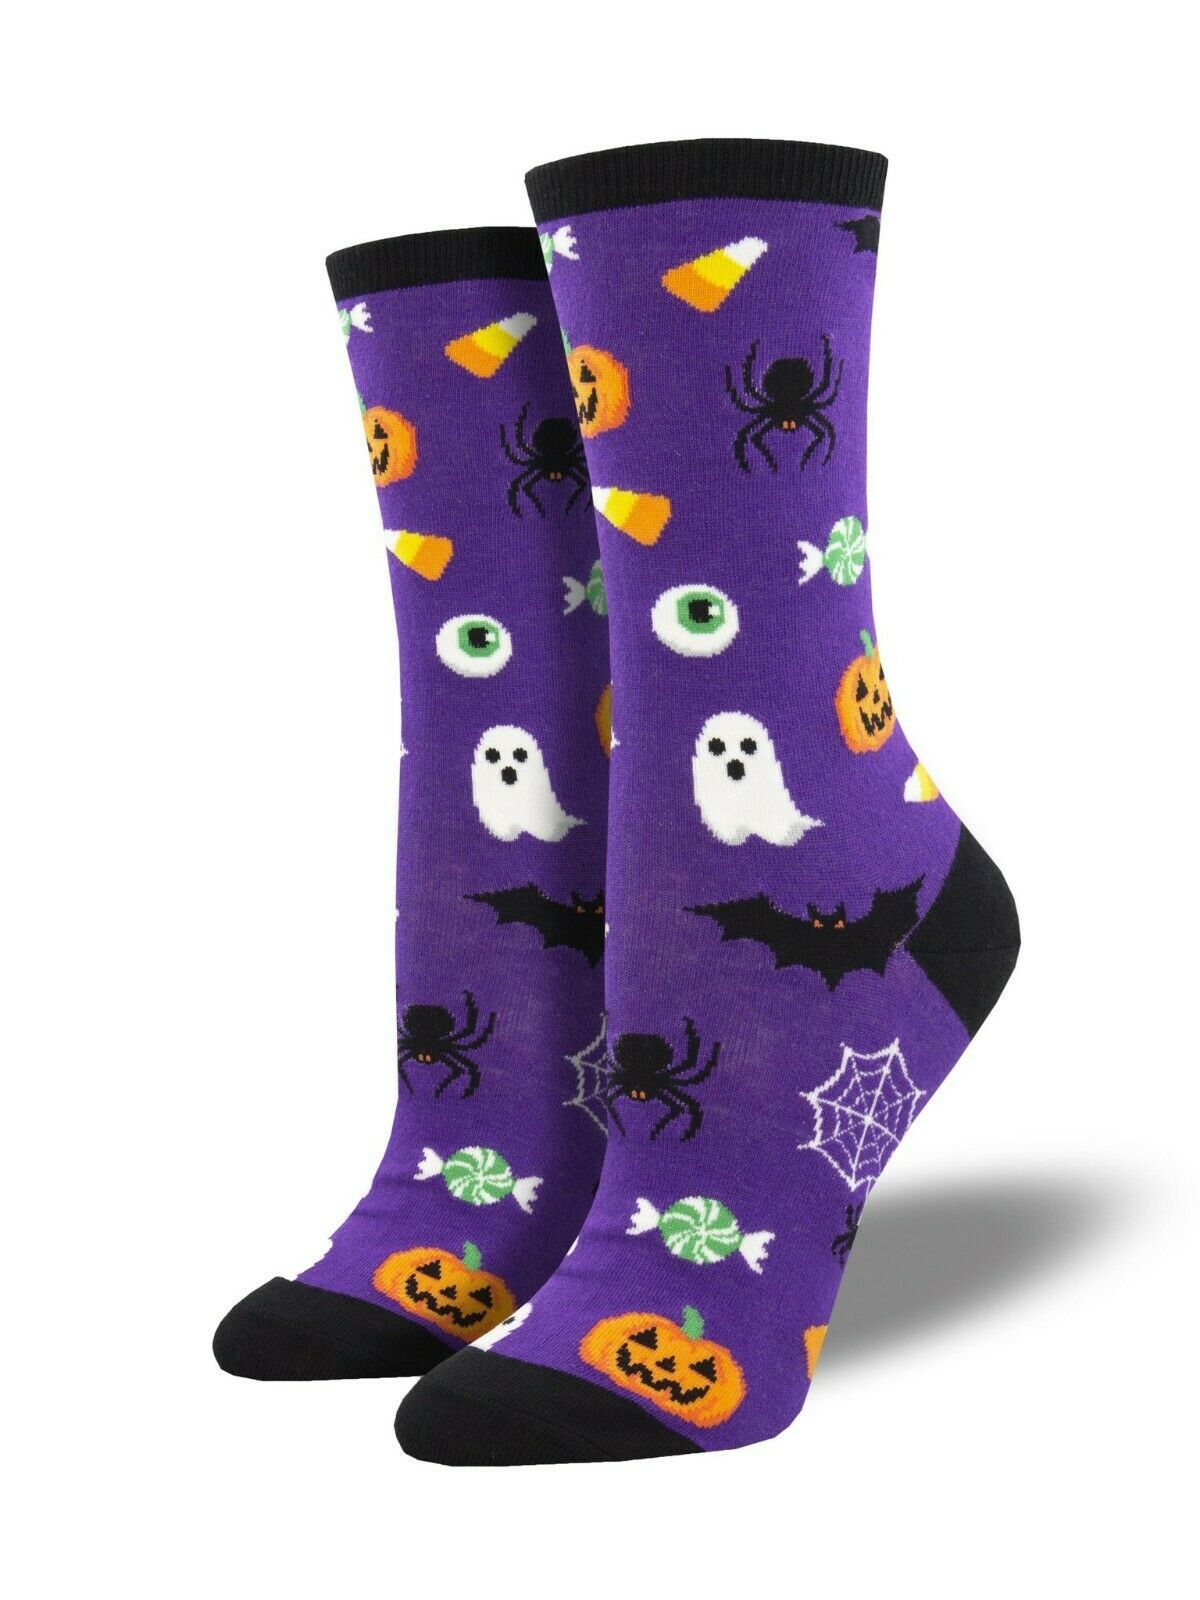 Primary image for Socksmith Women's Socks Novelty Crew Cut Socks "Very Spooky Creatures" / Purple